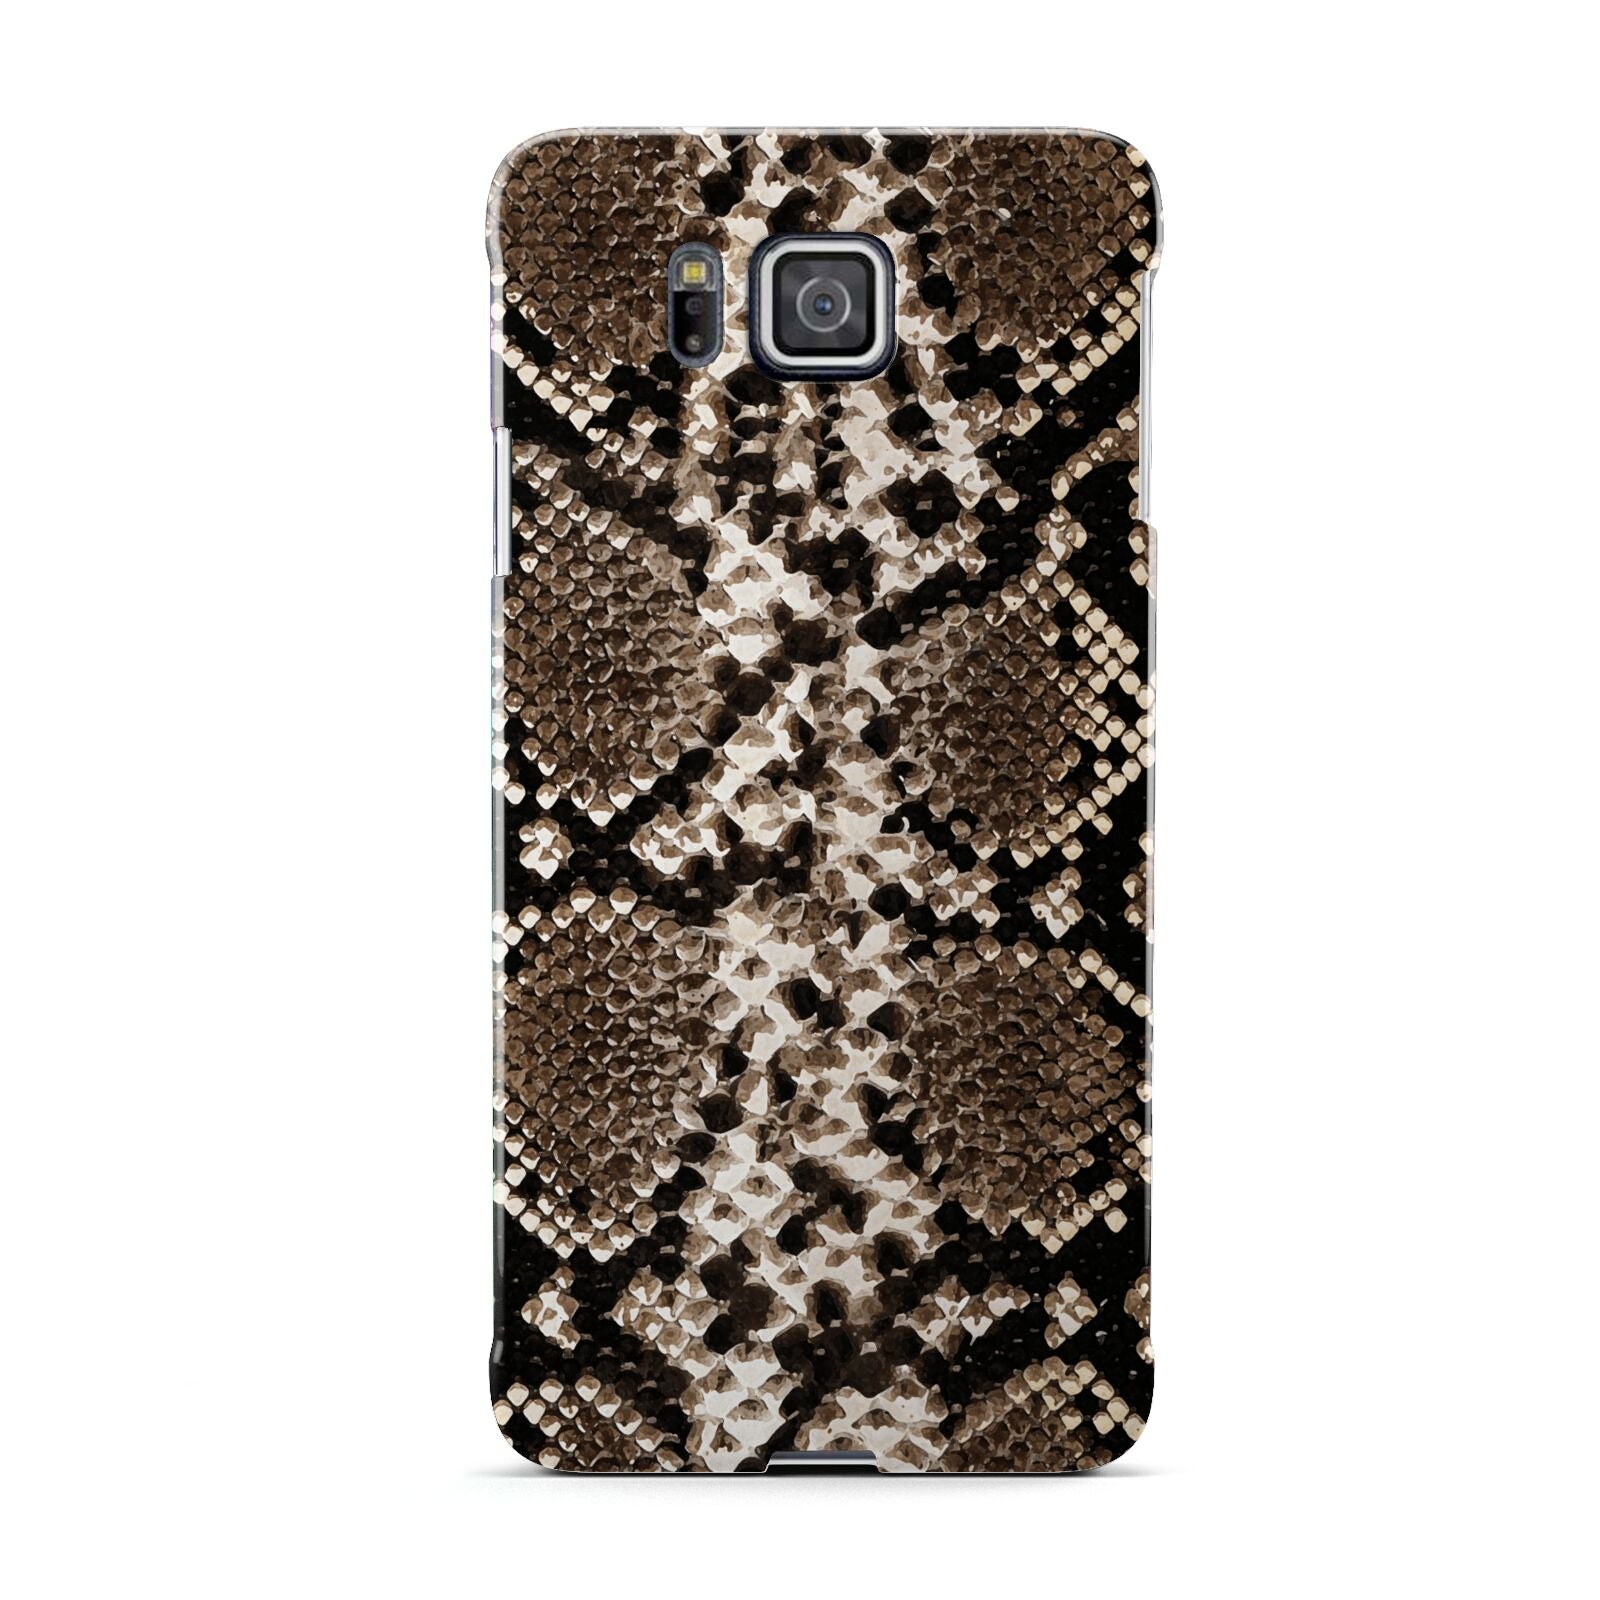 Snakeskin Pattern Samsung Galaxy Alpha Case